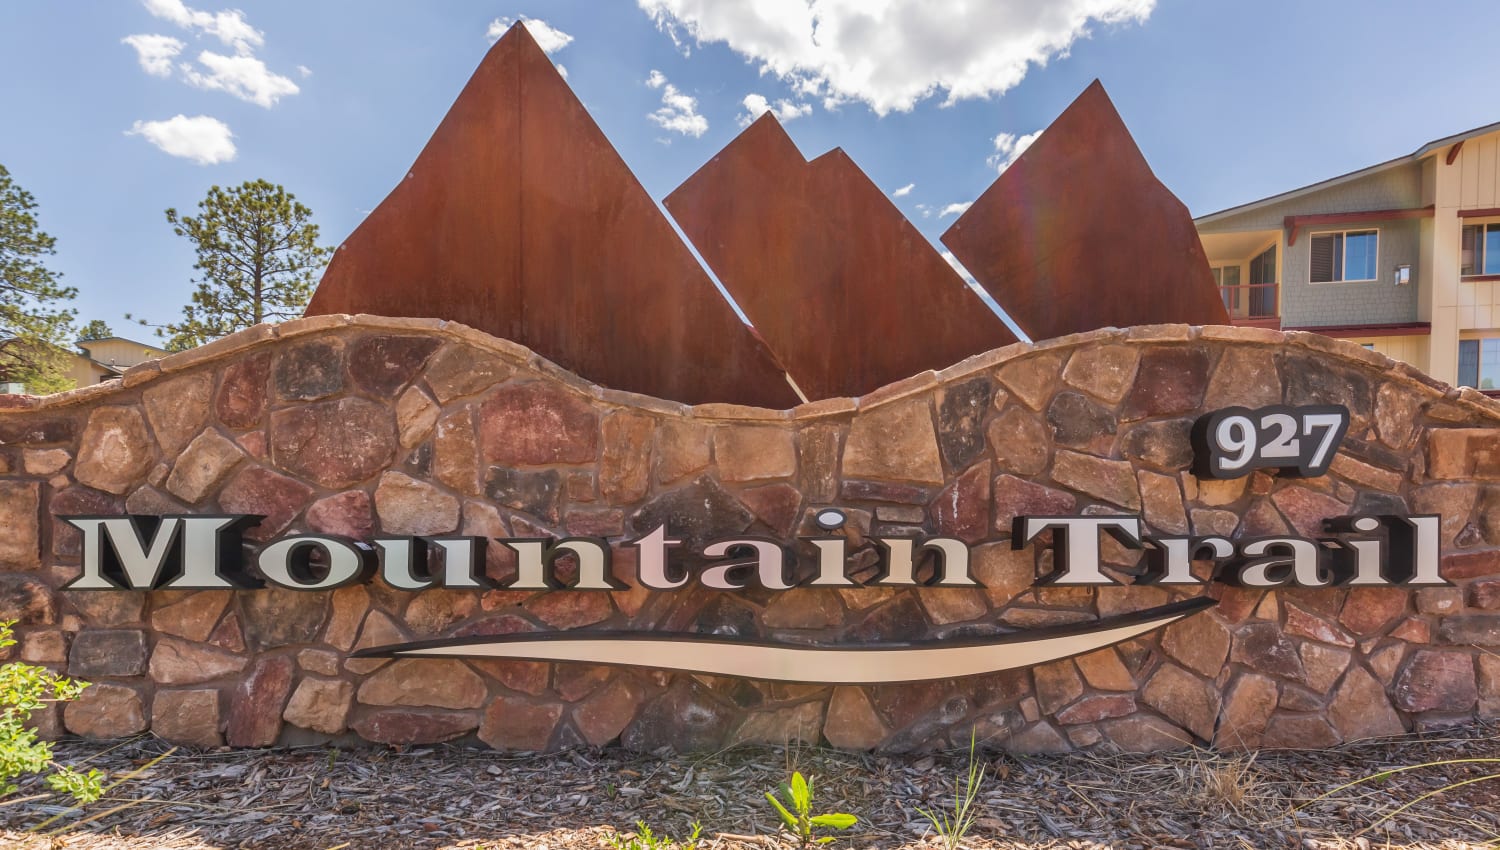 Mountain Trail sign in Flagstaff, Arizona